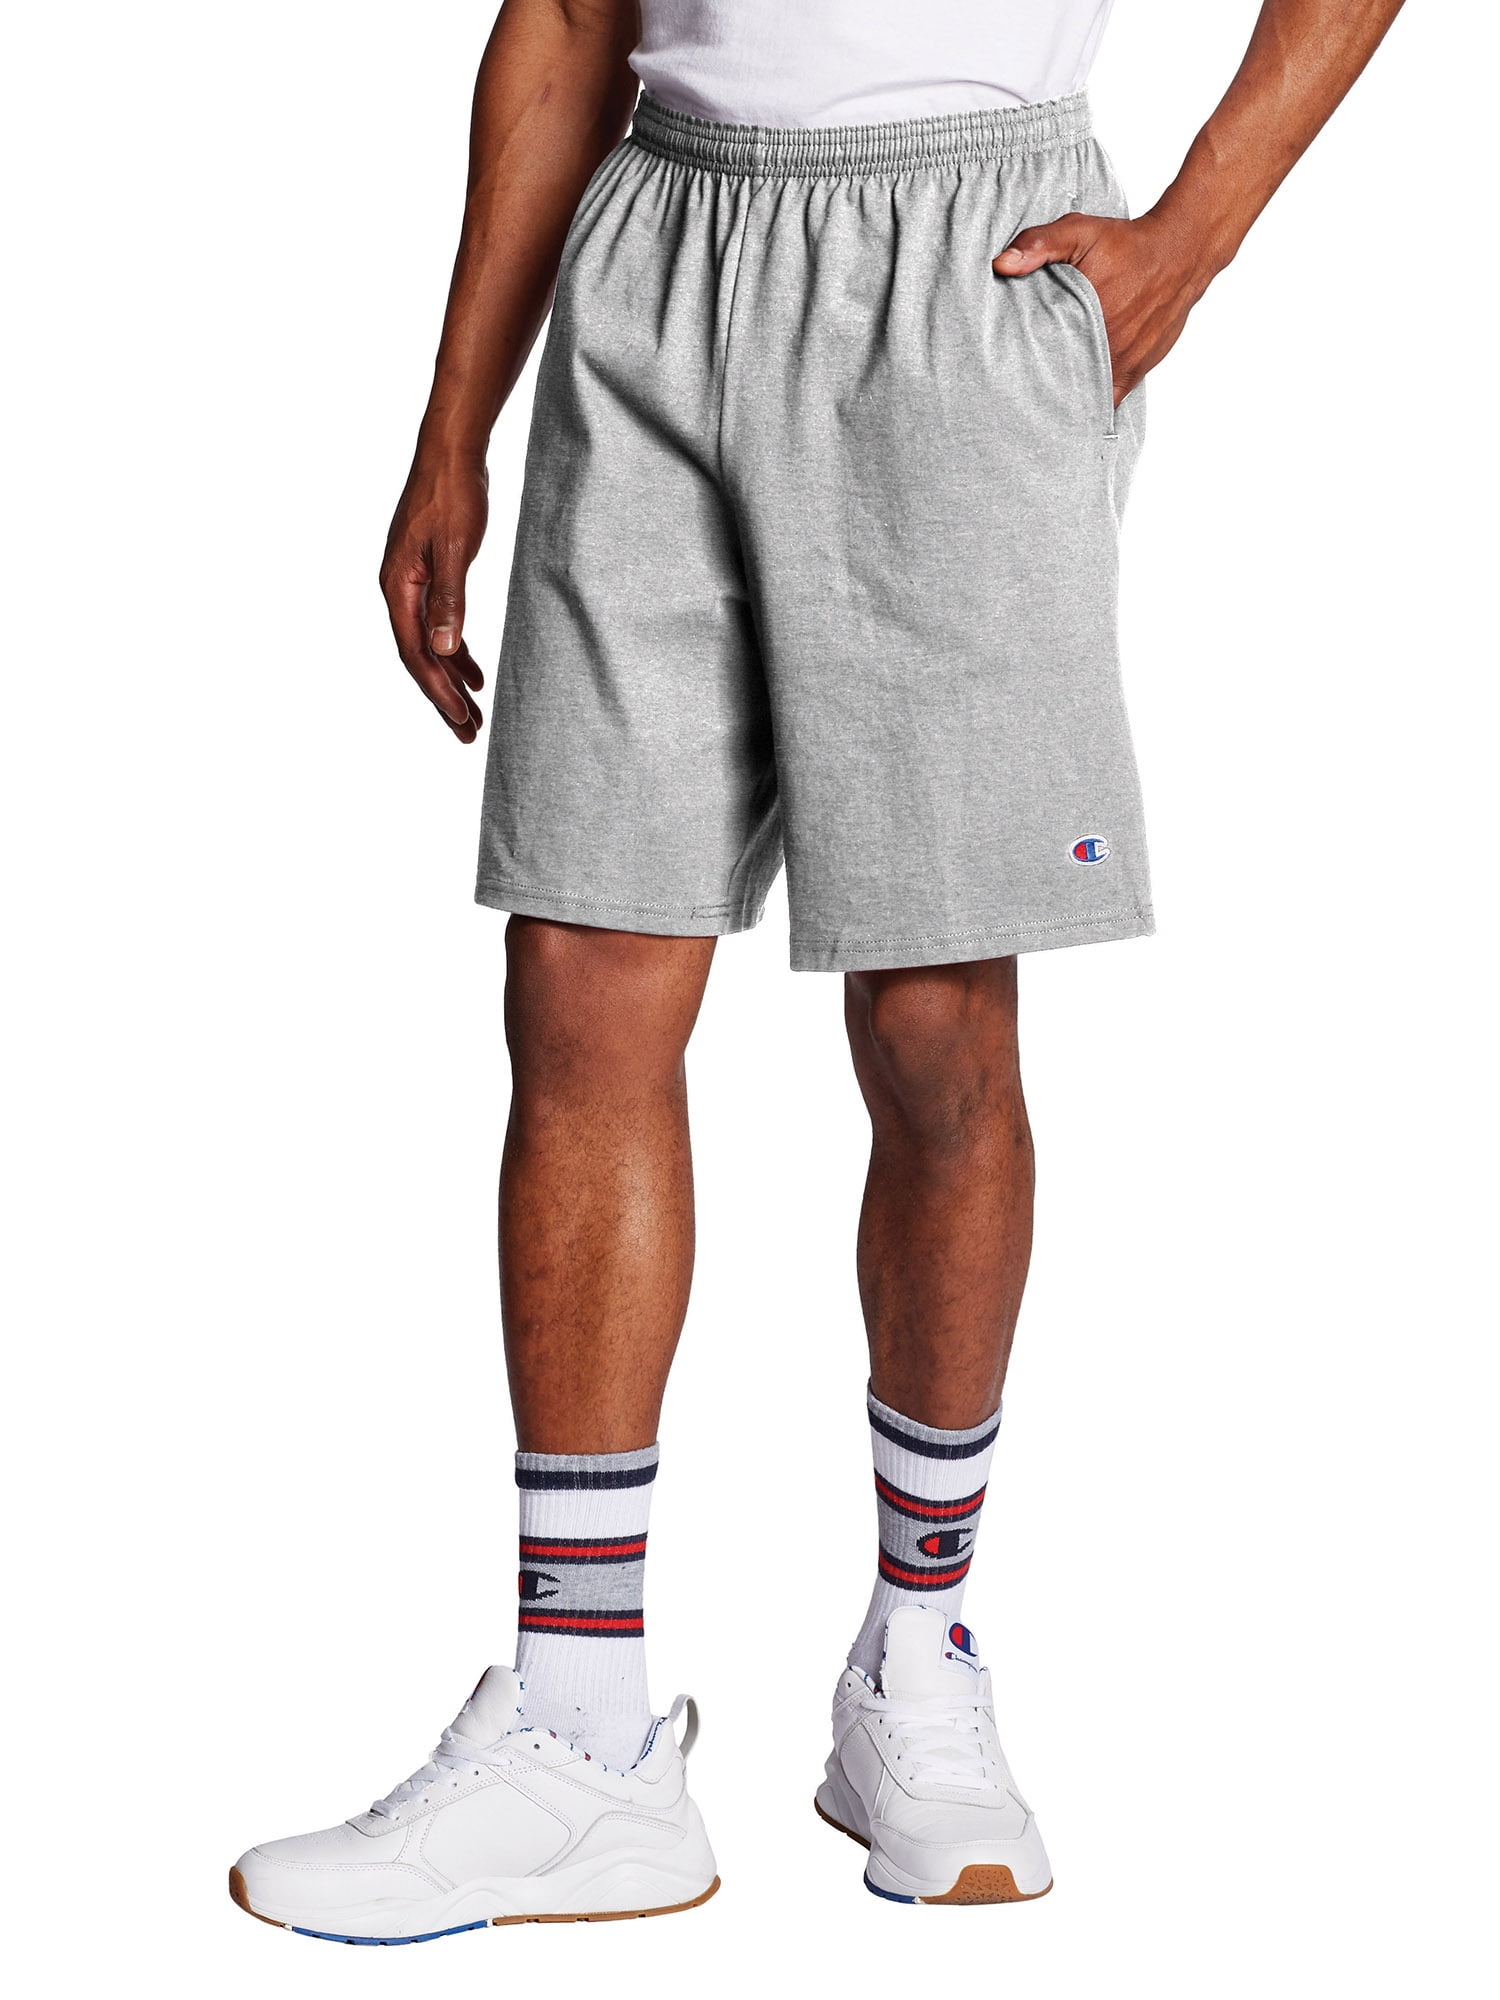 Dusør gidsel vandrerhjemmet Champion Men's Authentic Cotton 9" Shorts with Pockets, up to Size 4XL -  Walmart.com